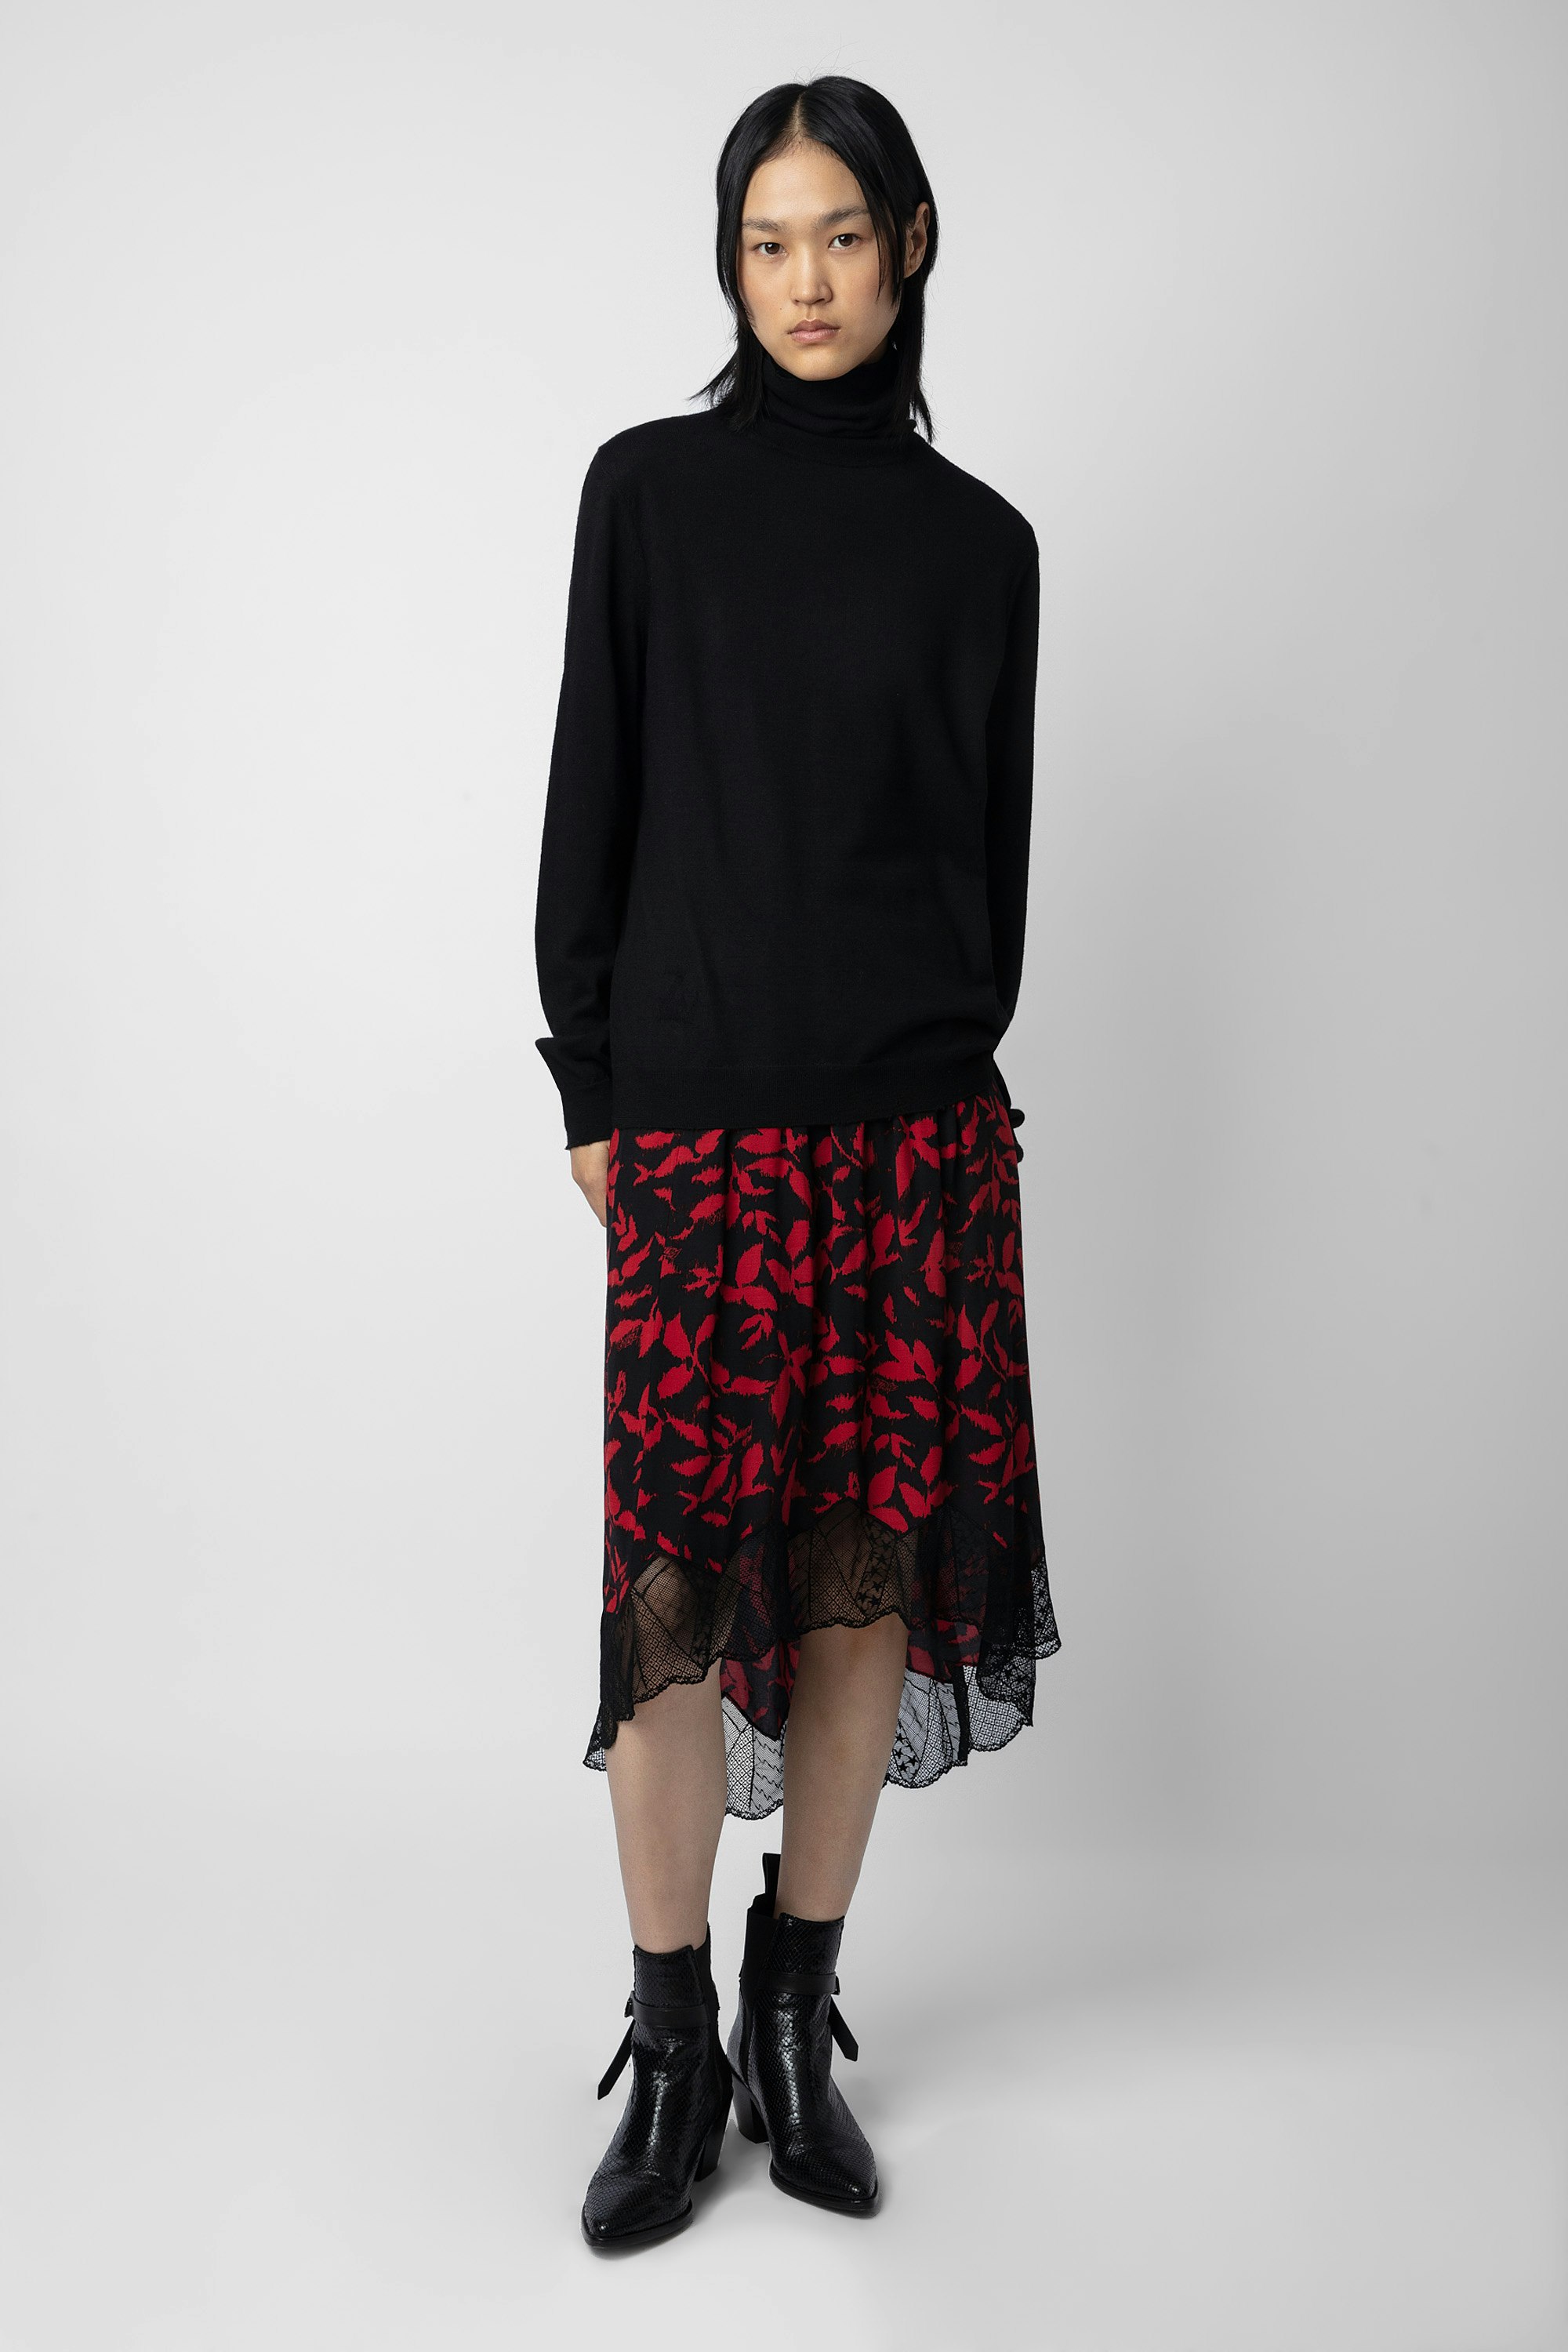 Joslin Skirt - Women’s black floral-print midi skirt with lace trim.